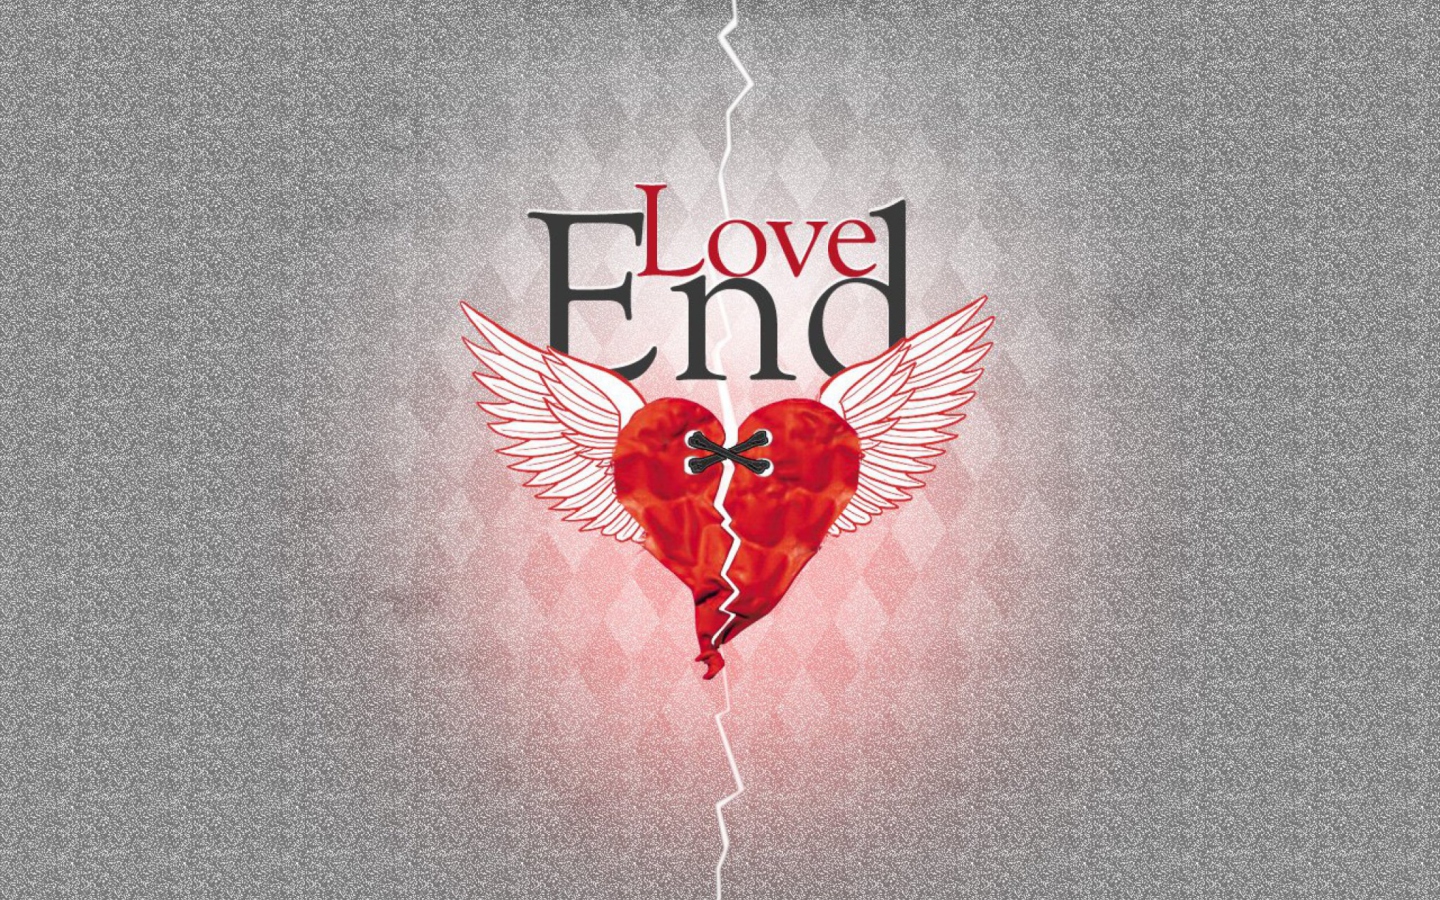 End Love wallpaper 1440x900